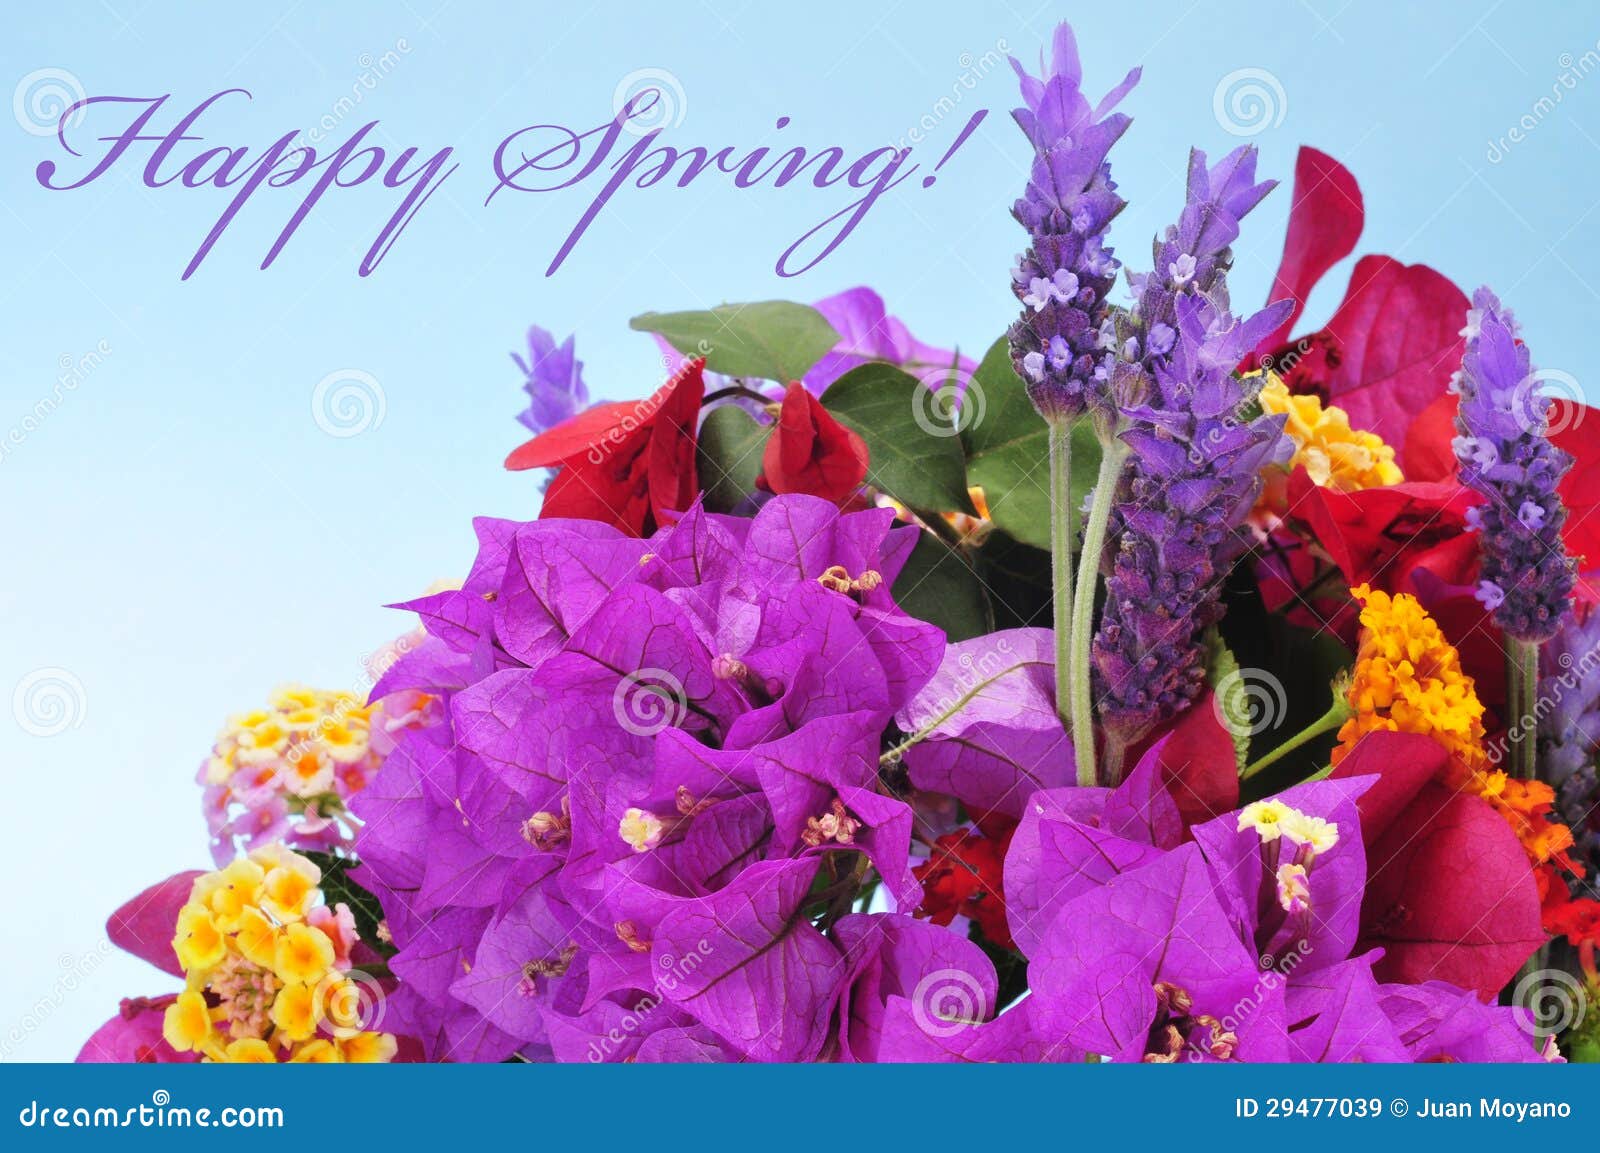 Happy Spring Images Free mystrangelifewithonedirection